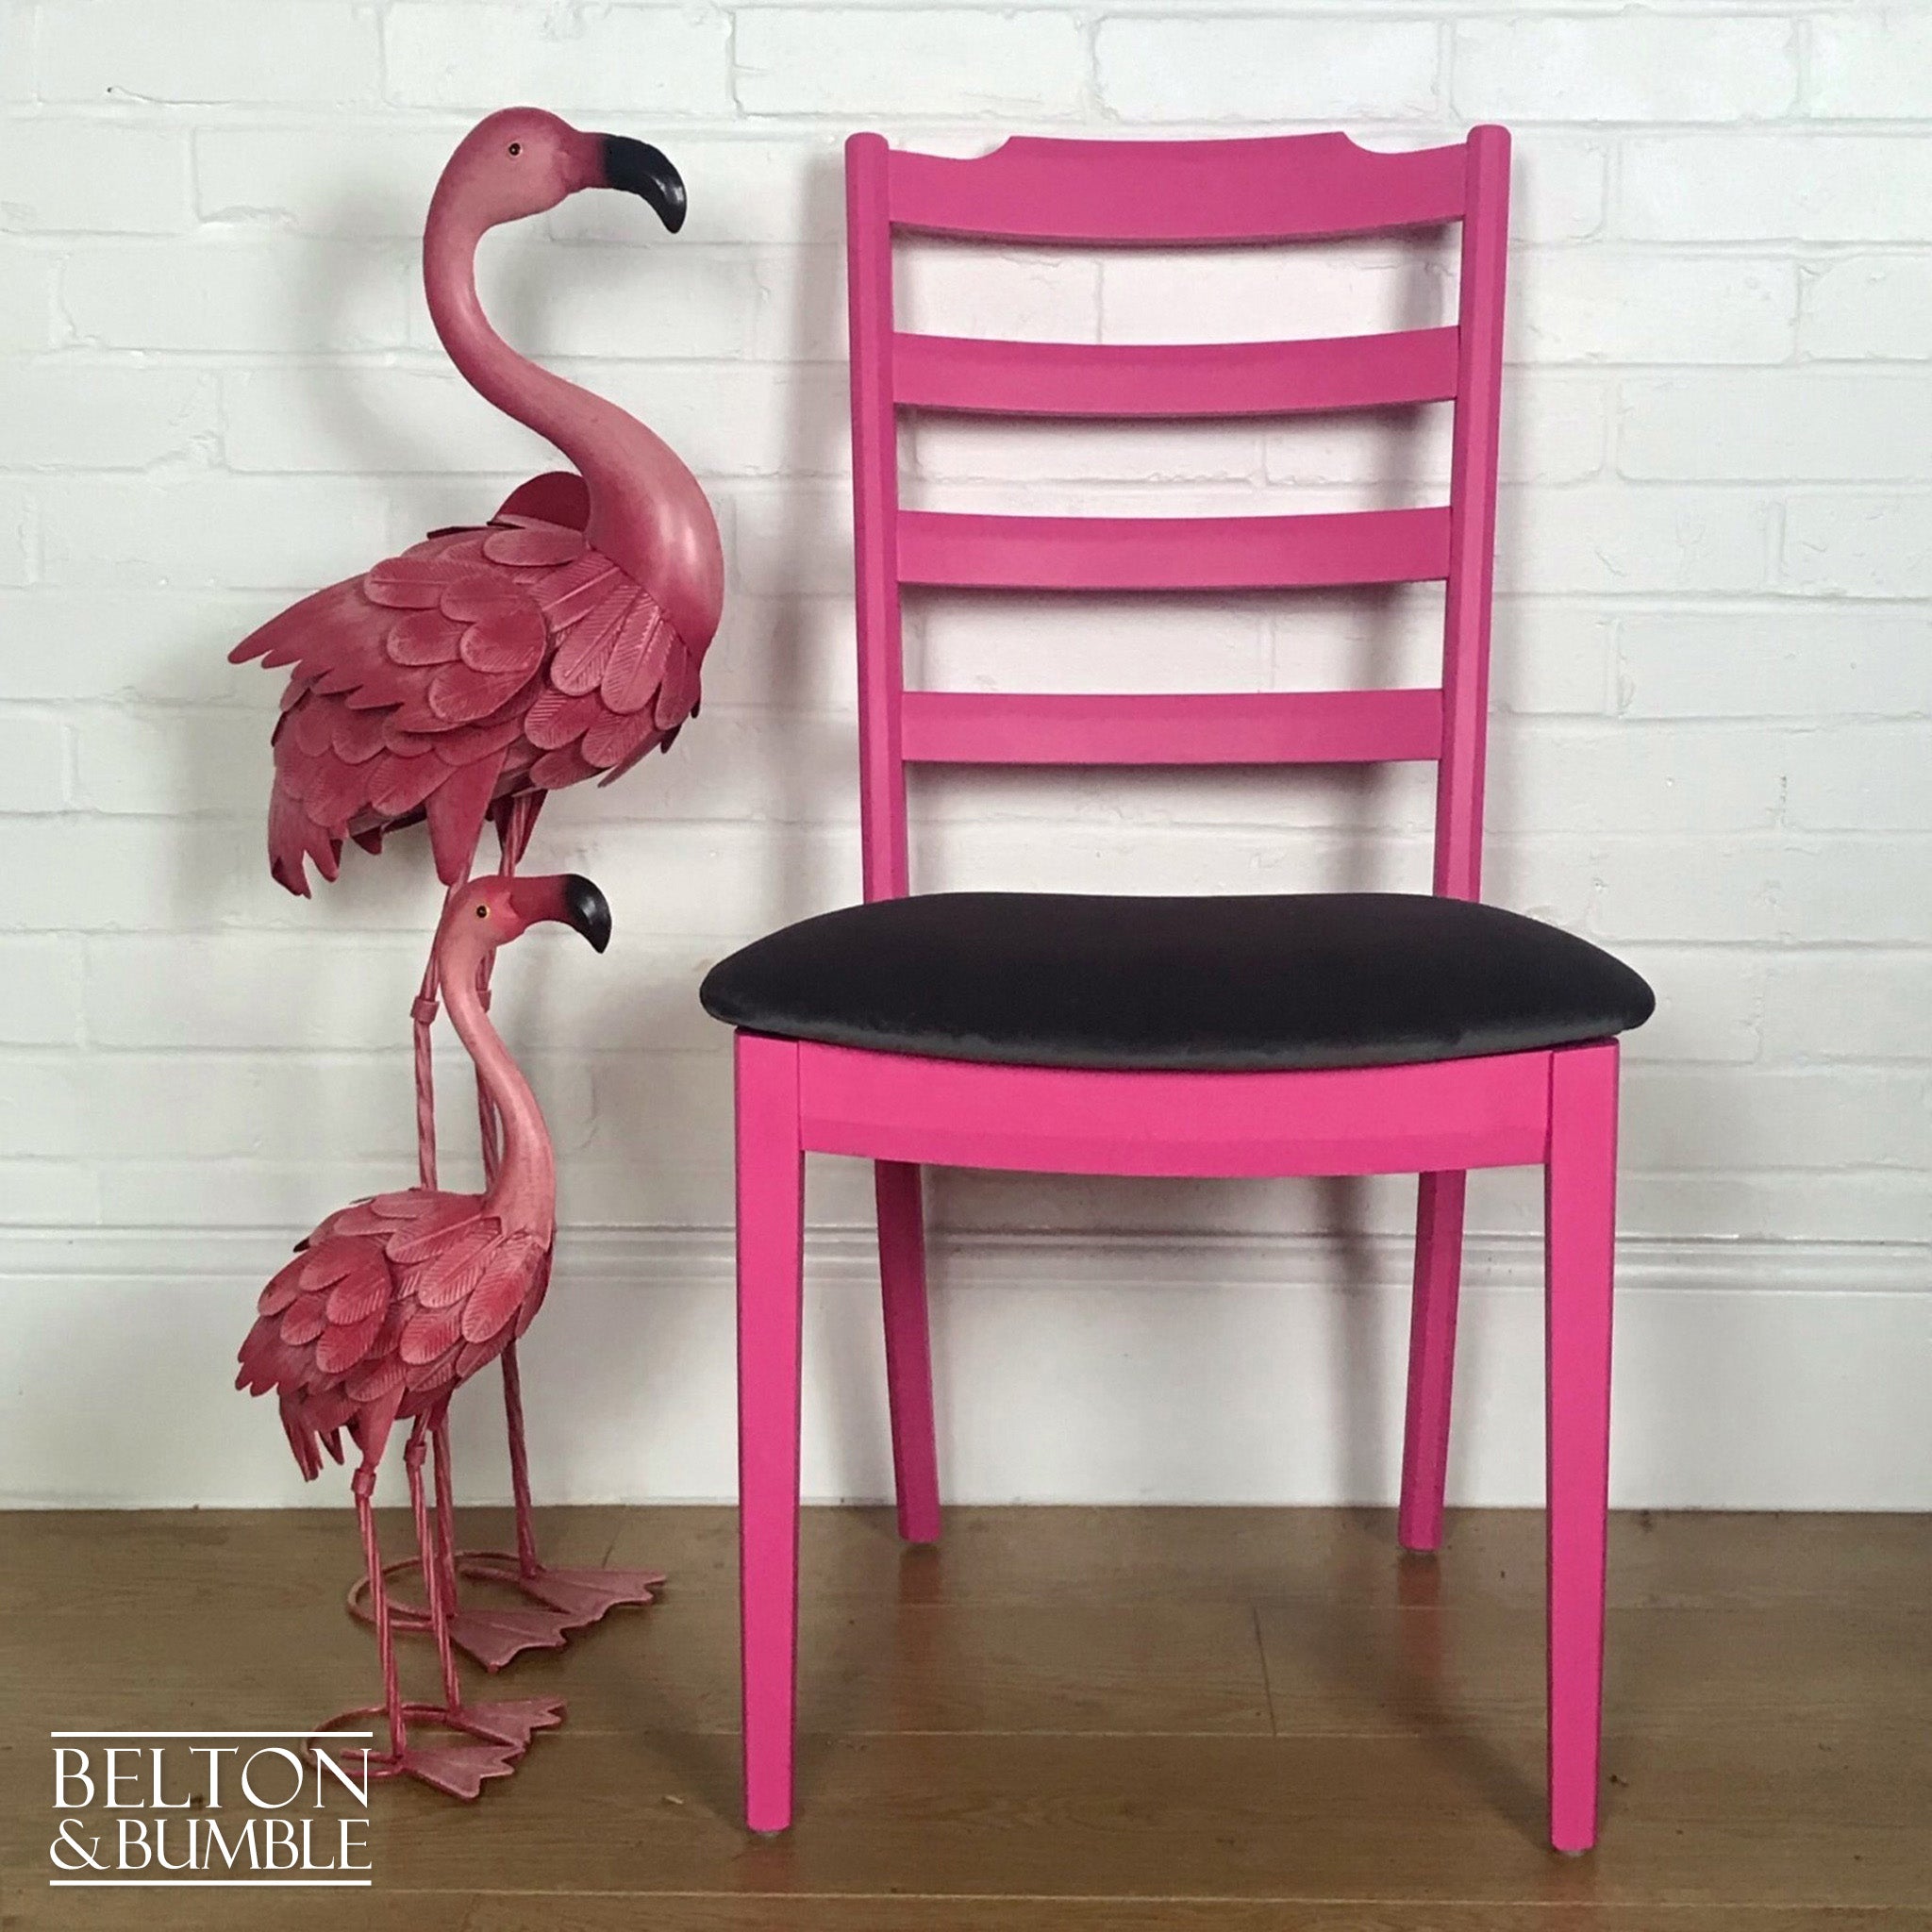 Bright Pink Single G Plan Chair with Grey Velvet Seat.-Belton & Butler